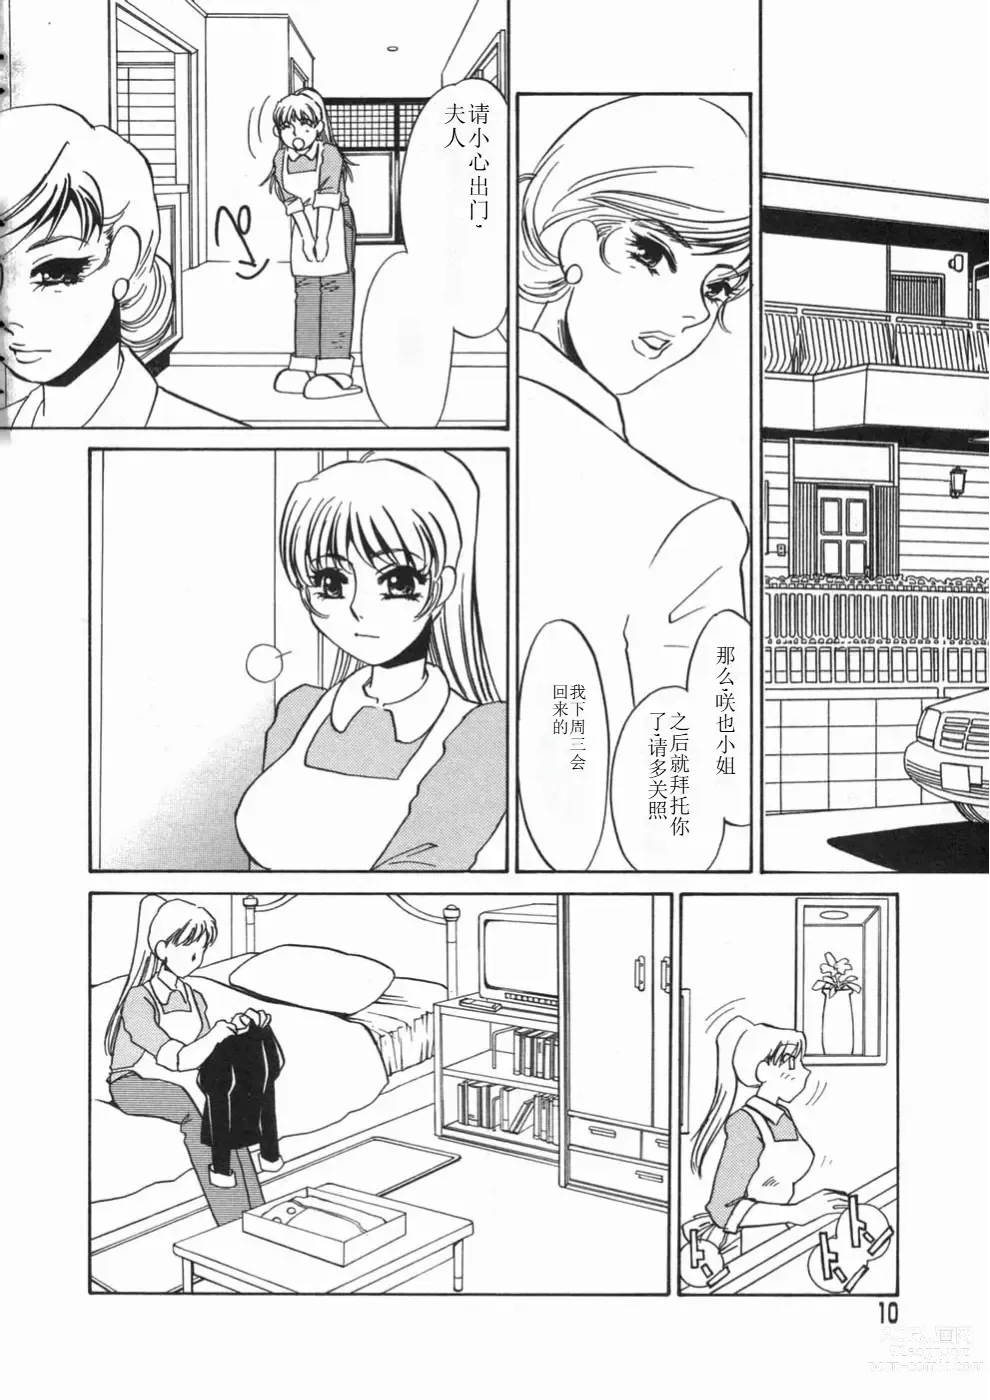 Page 10 of manga Ruirui